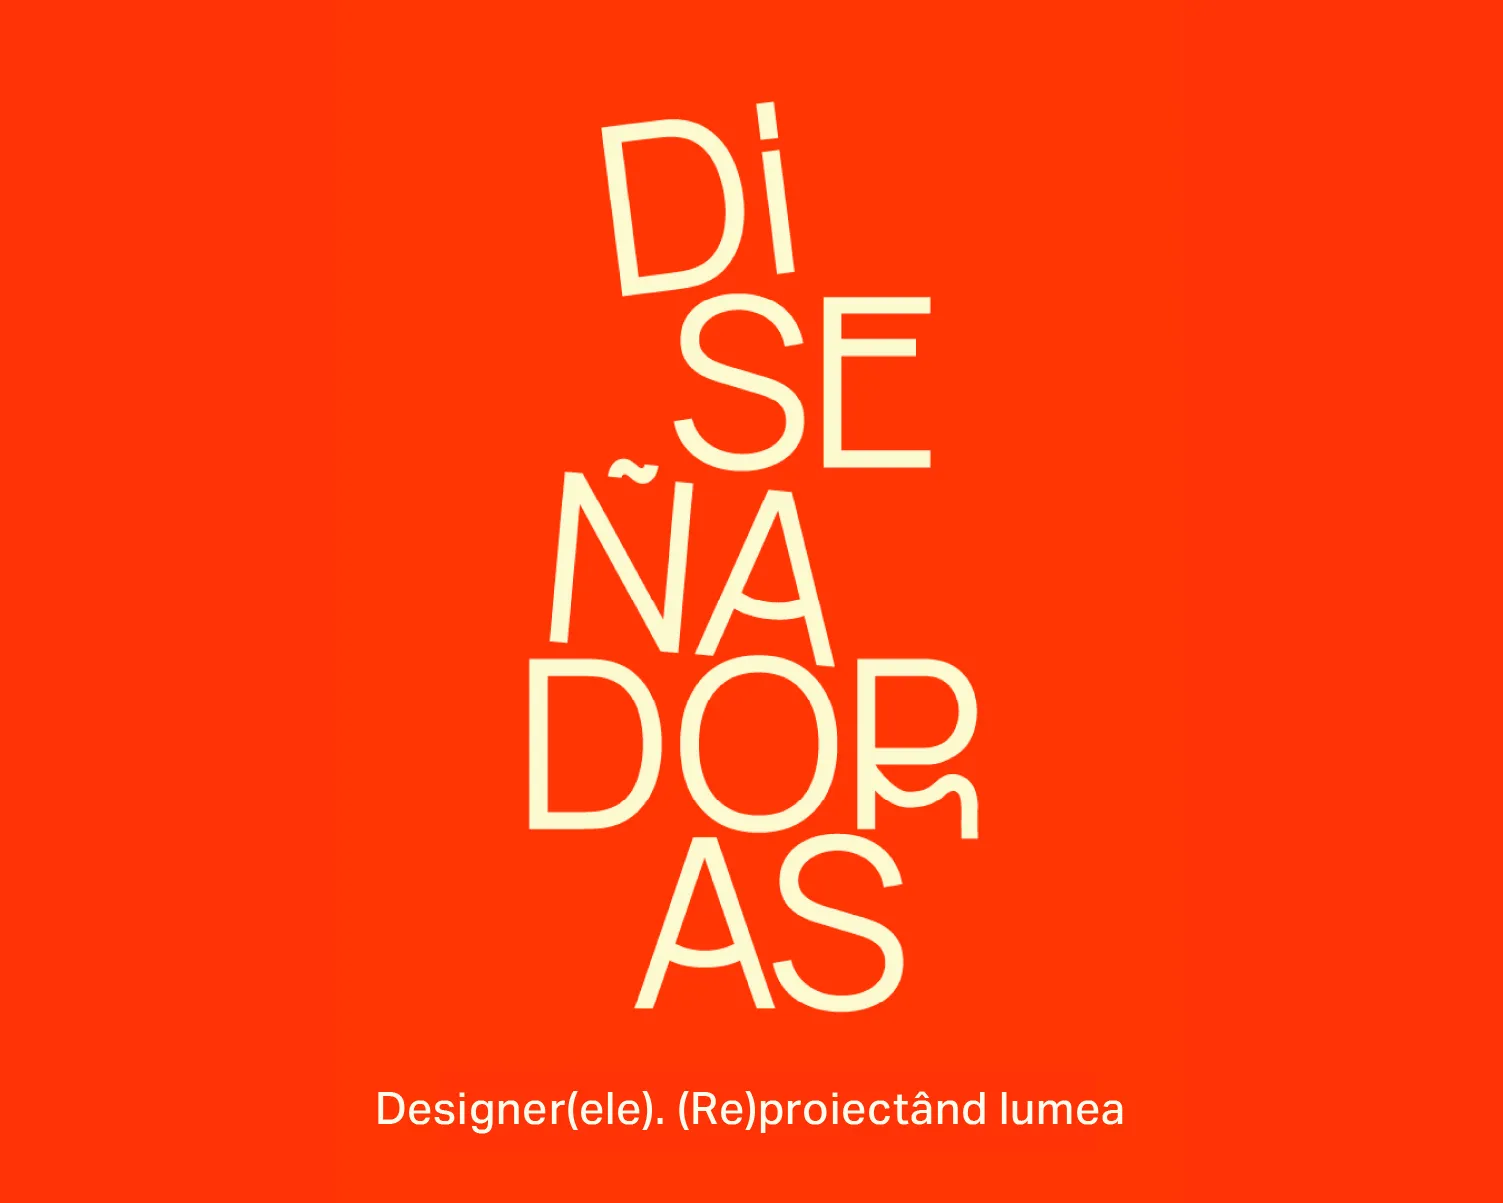 Designer(s). (Re)designing the world - design exhibition